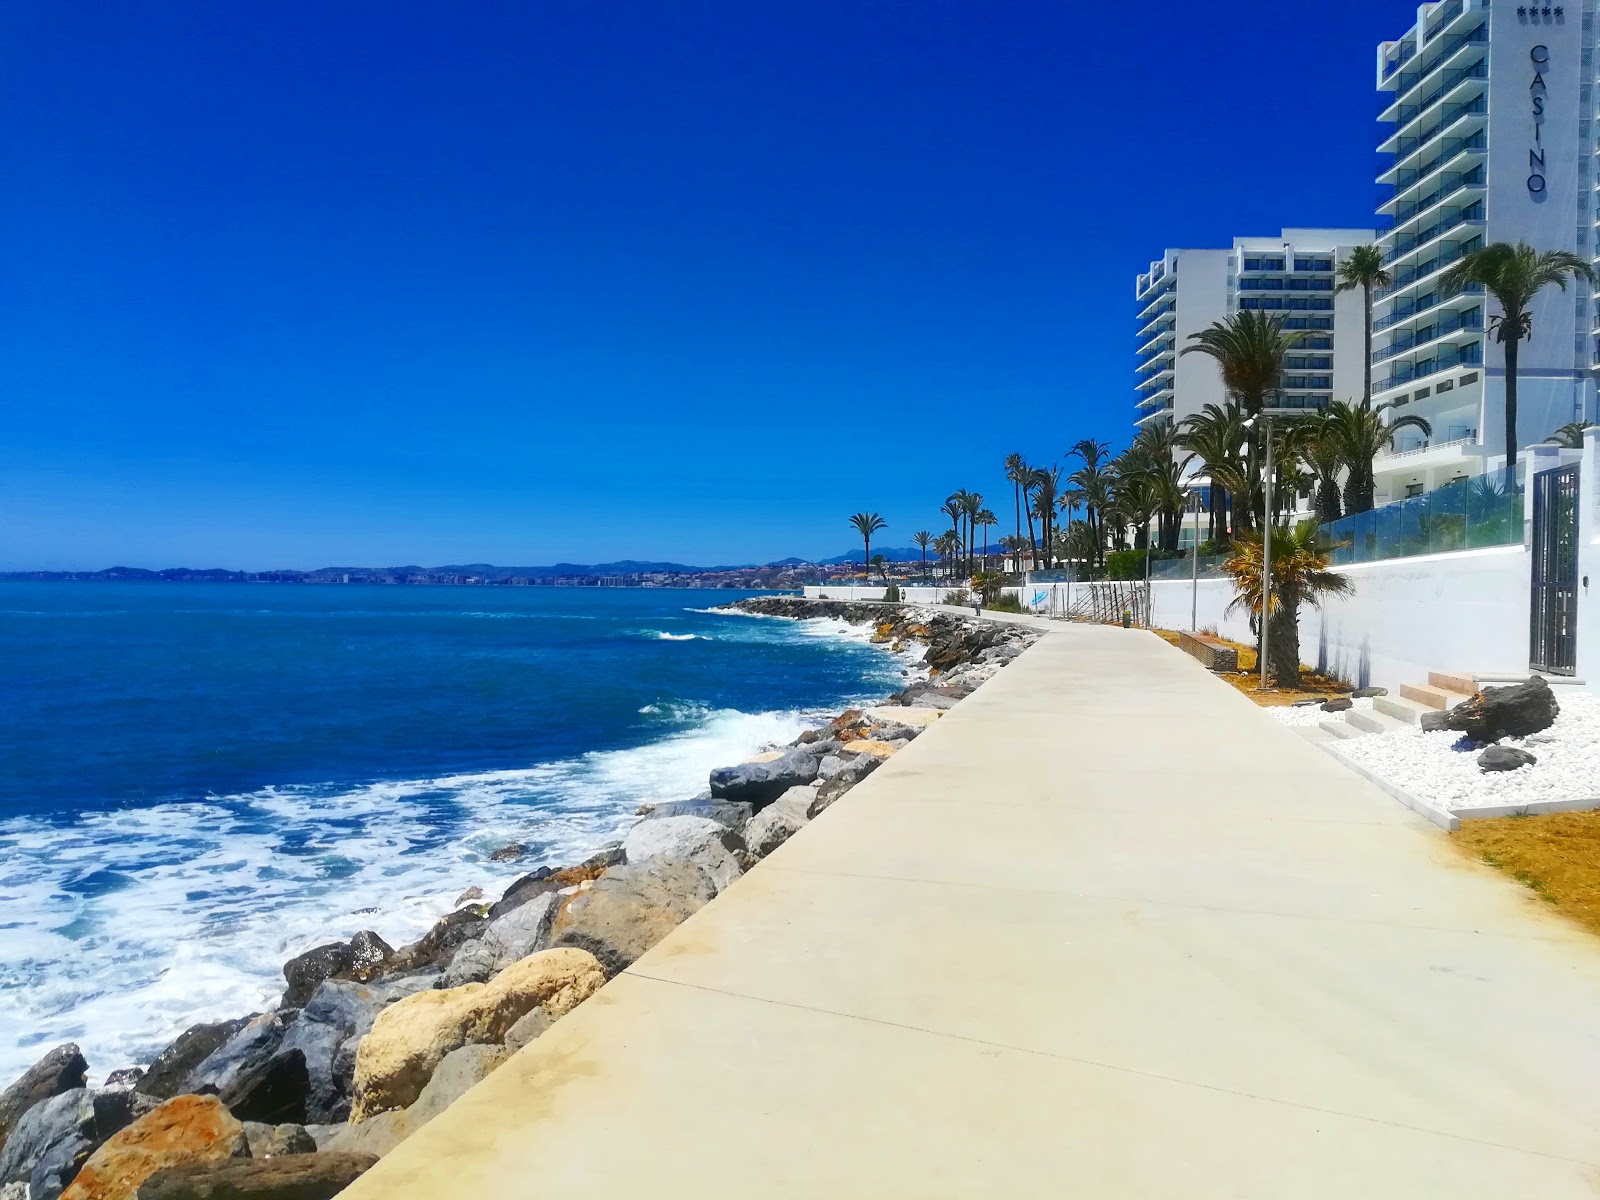 Photo of Playa Torrevigia with straight shore